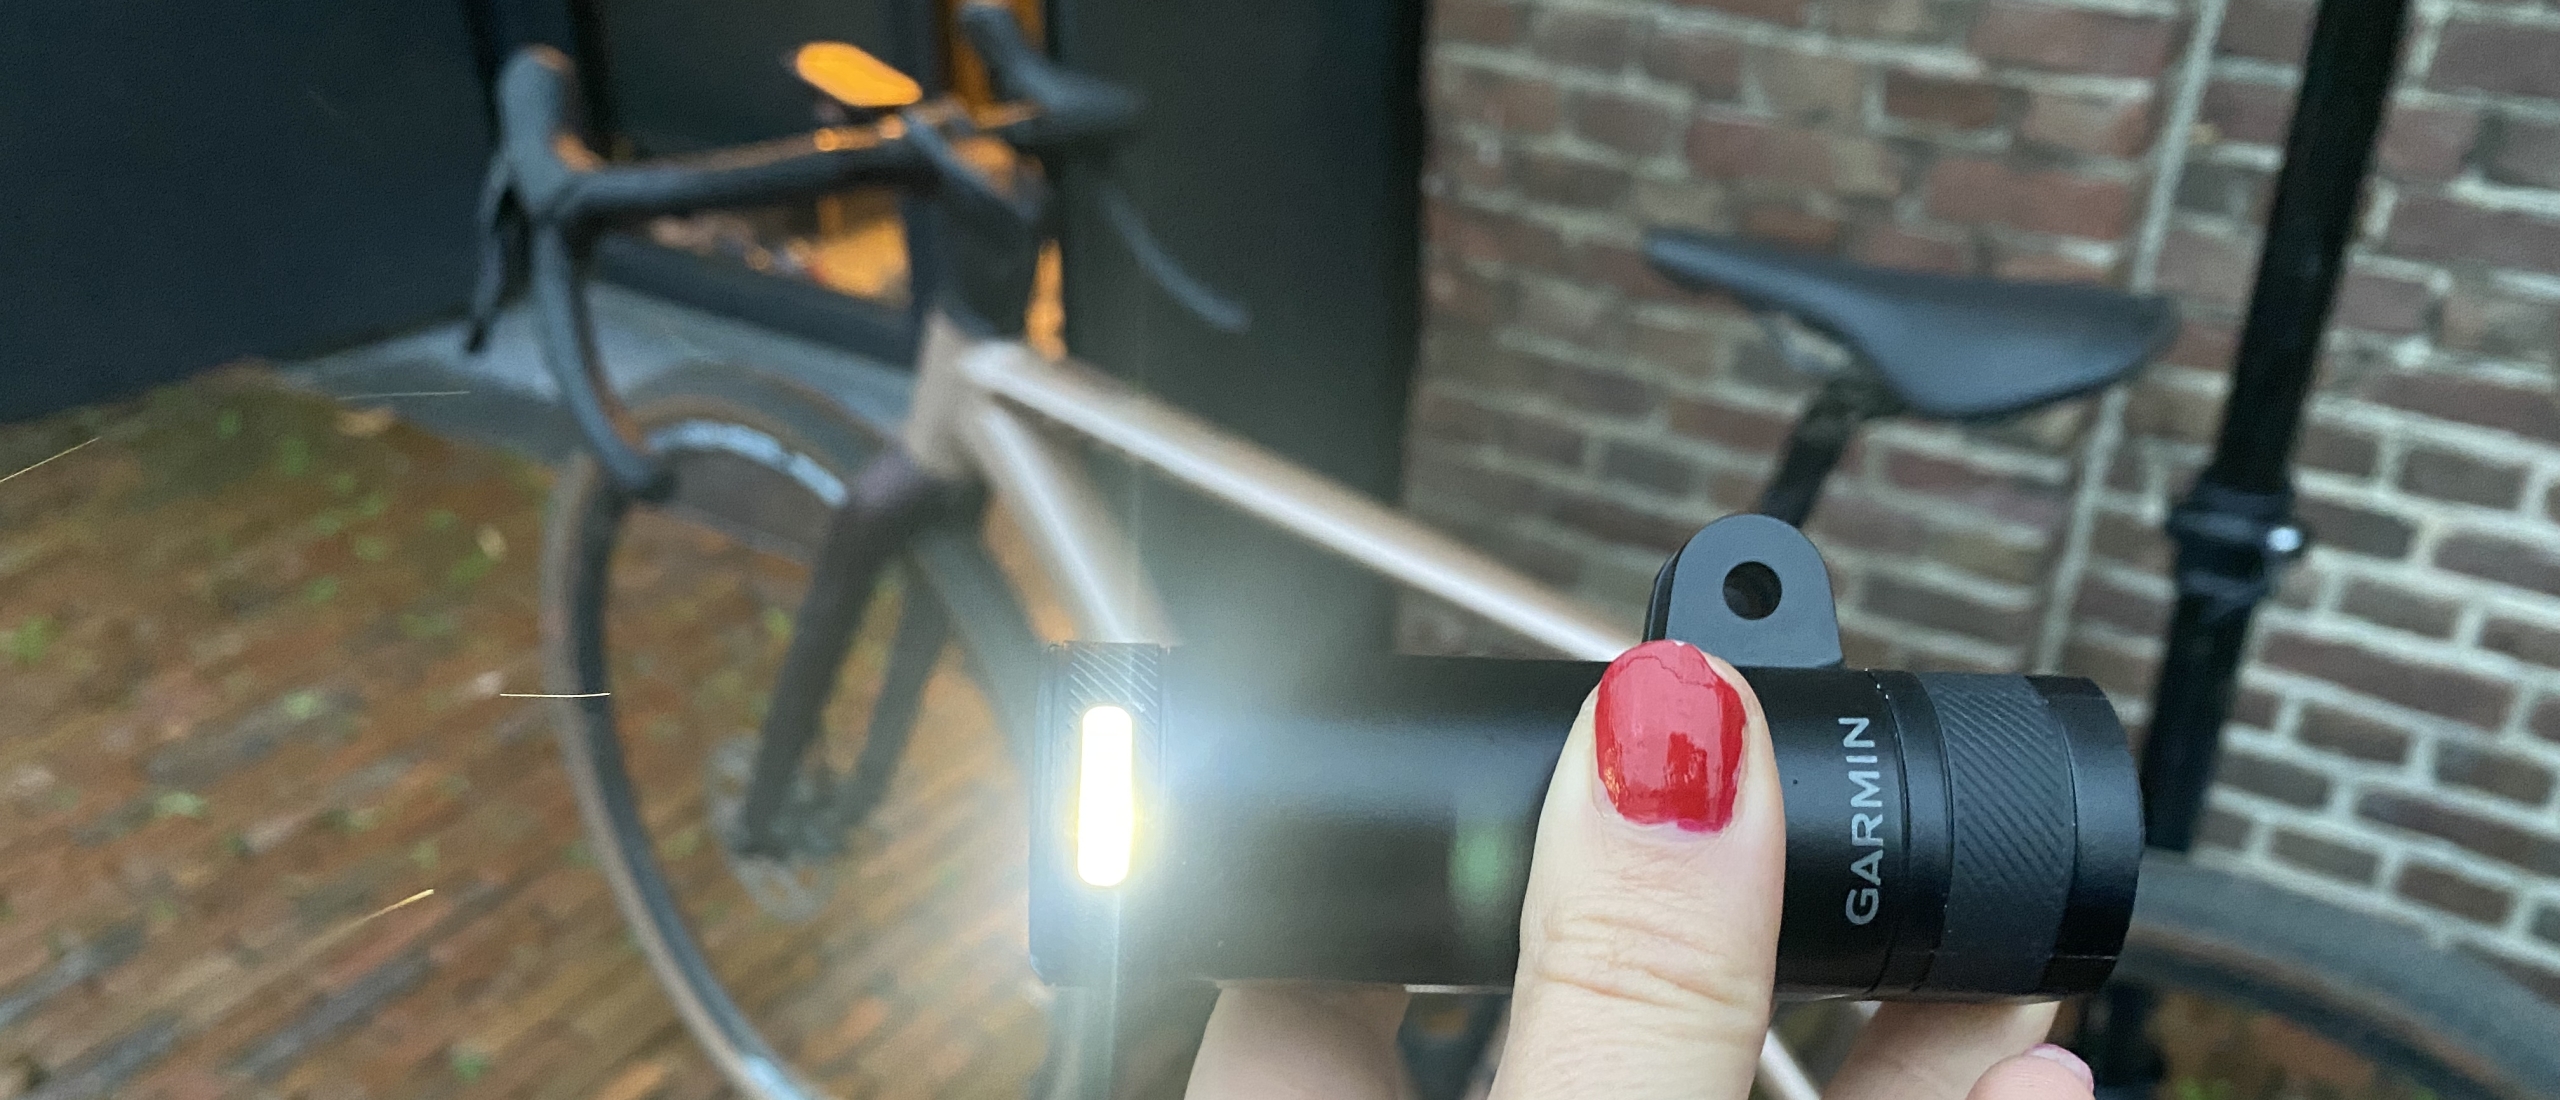 Hoe fiets je veilig in het donker?